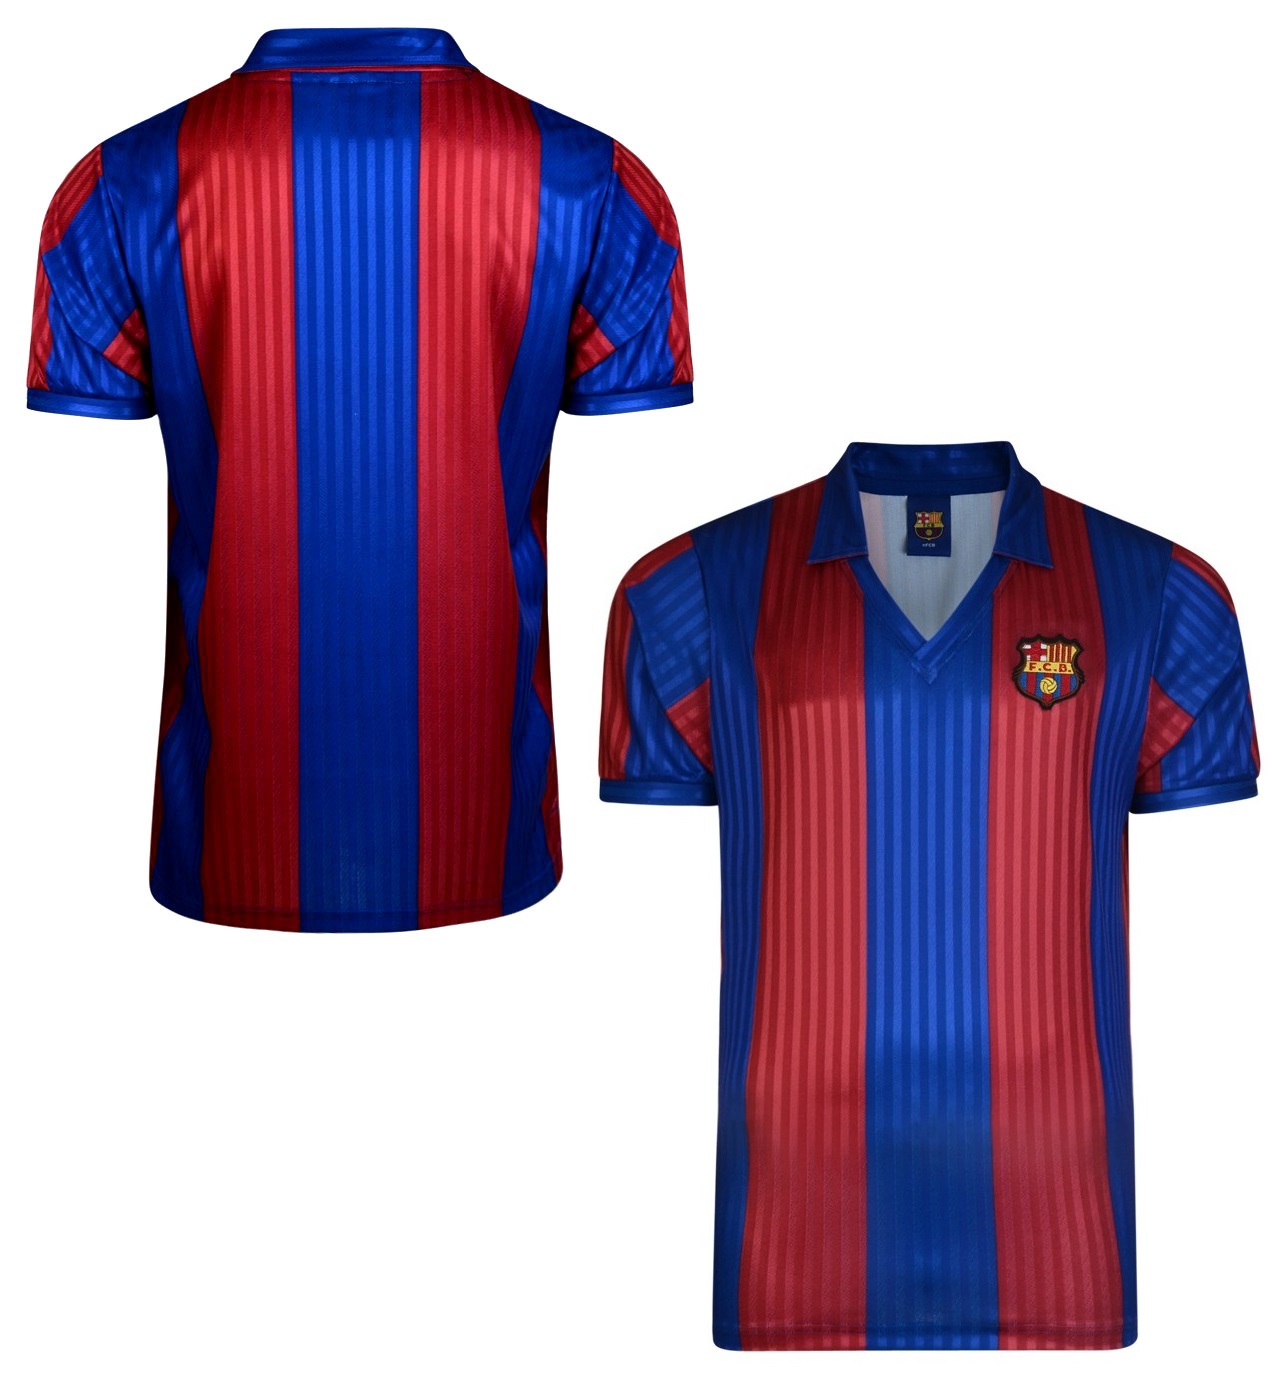 vintage fc barcelona jersey